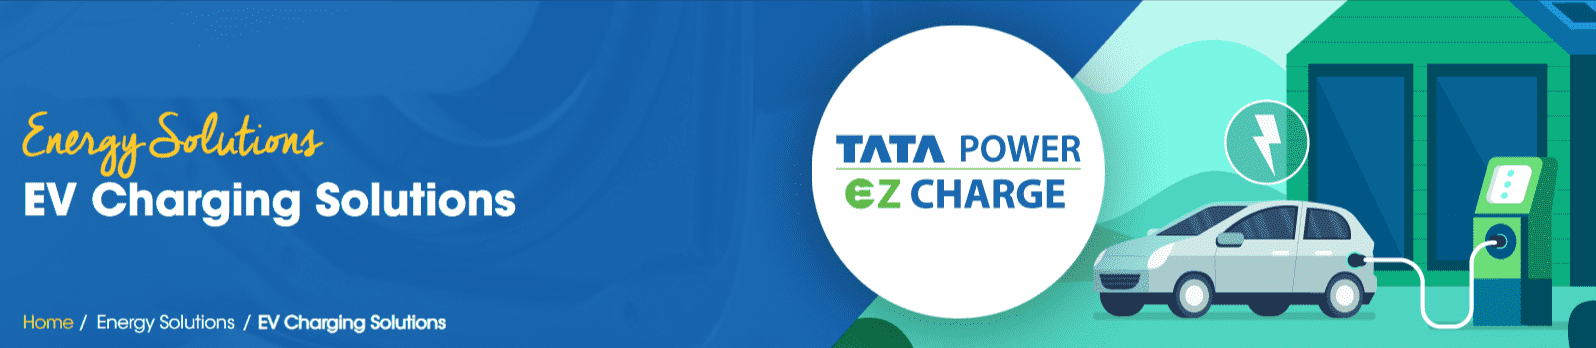 Tata-Power-EV-Charging-Station-EV-Charging-Points